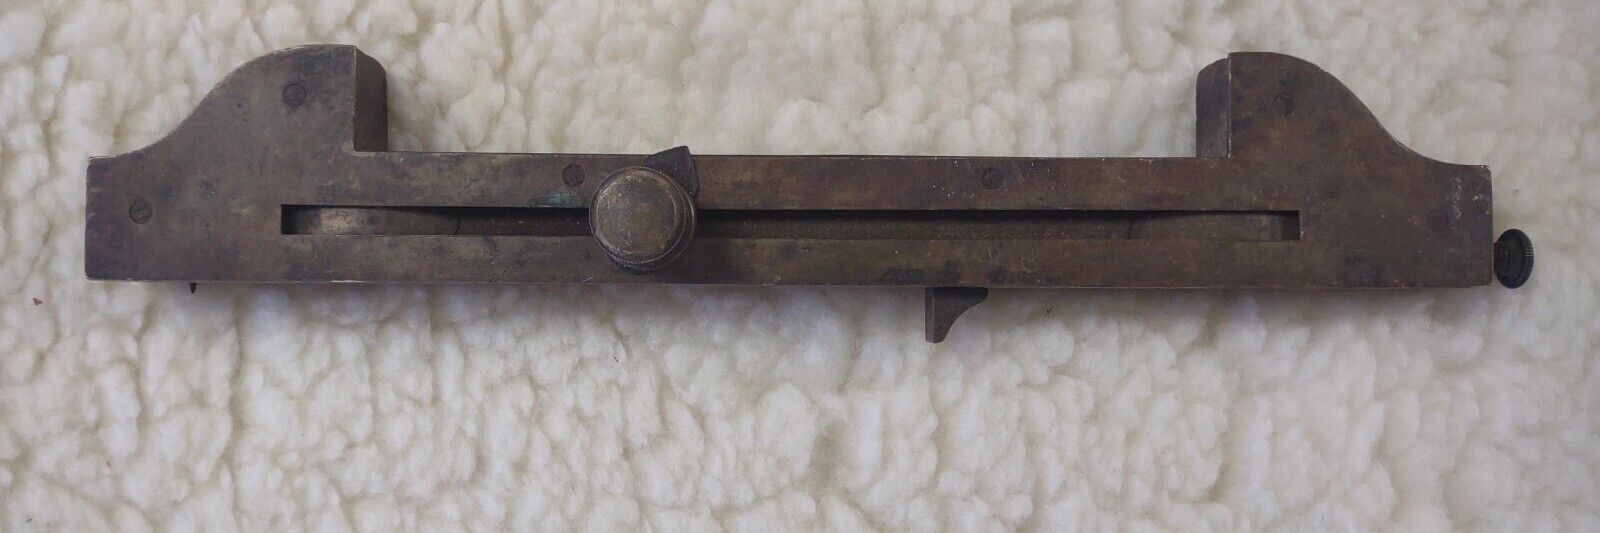  Antique clapboard gauge, Nesters Patent December 31,1867